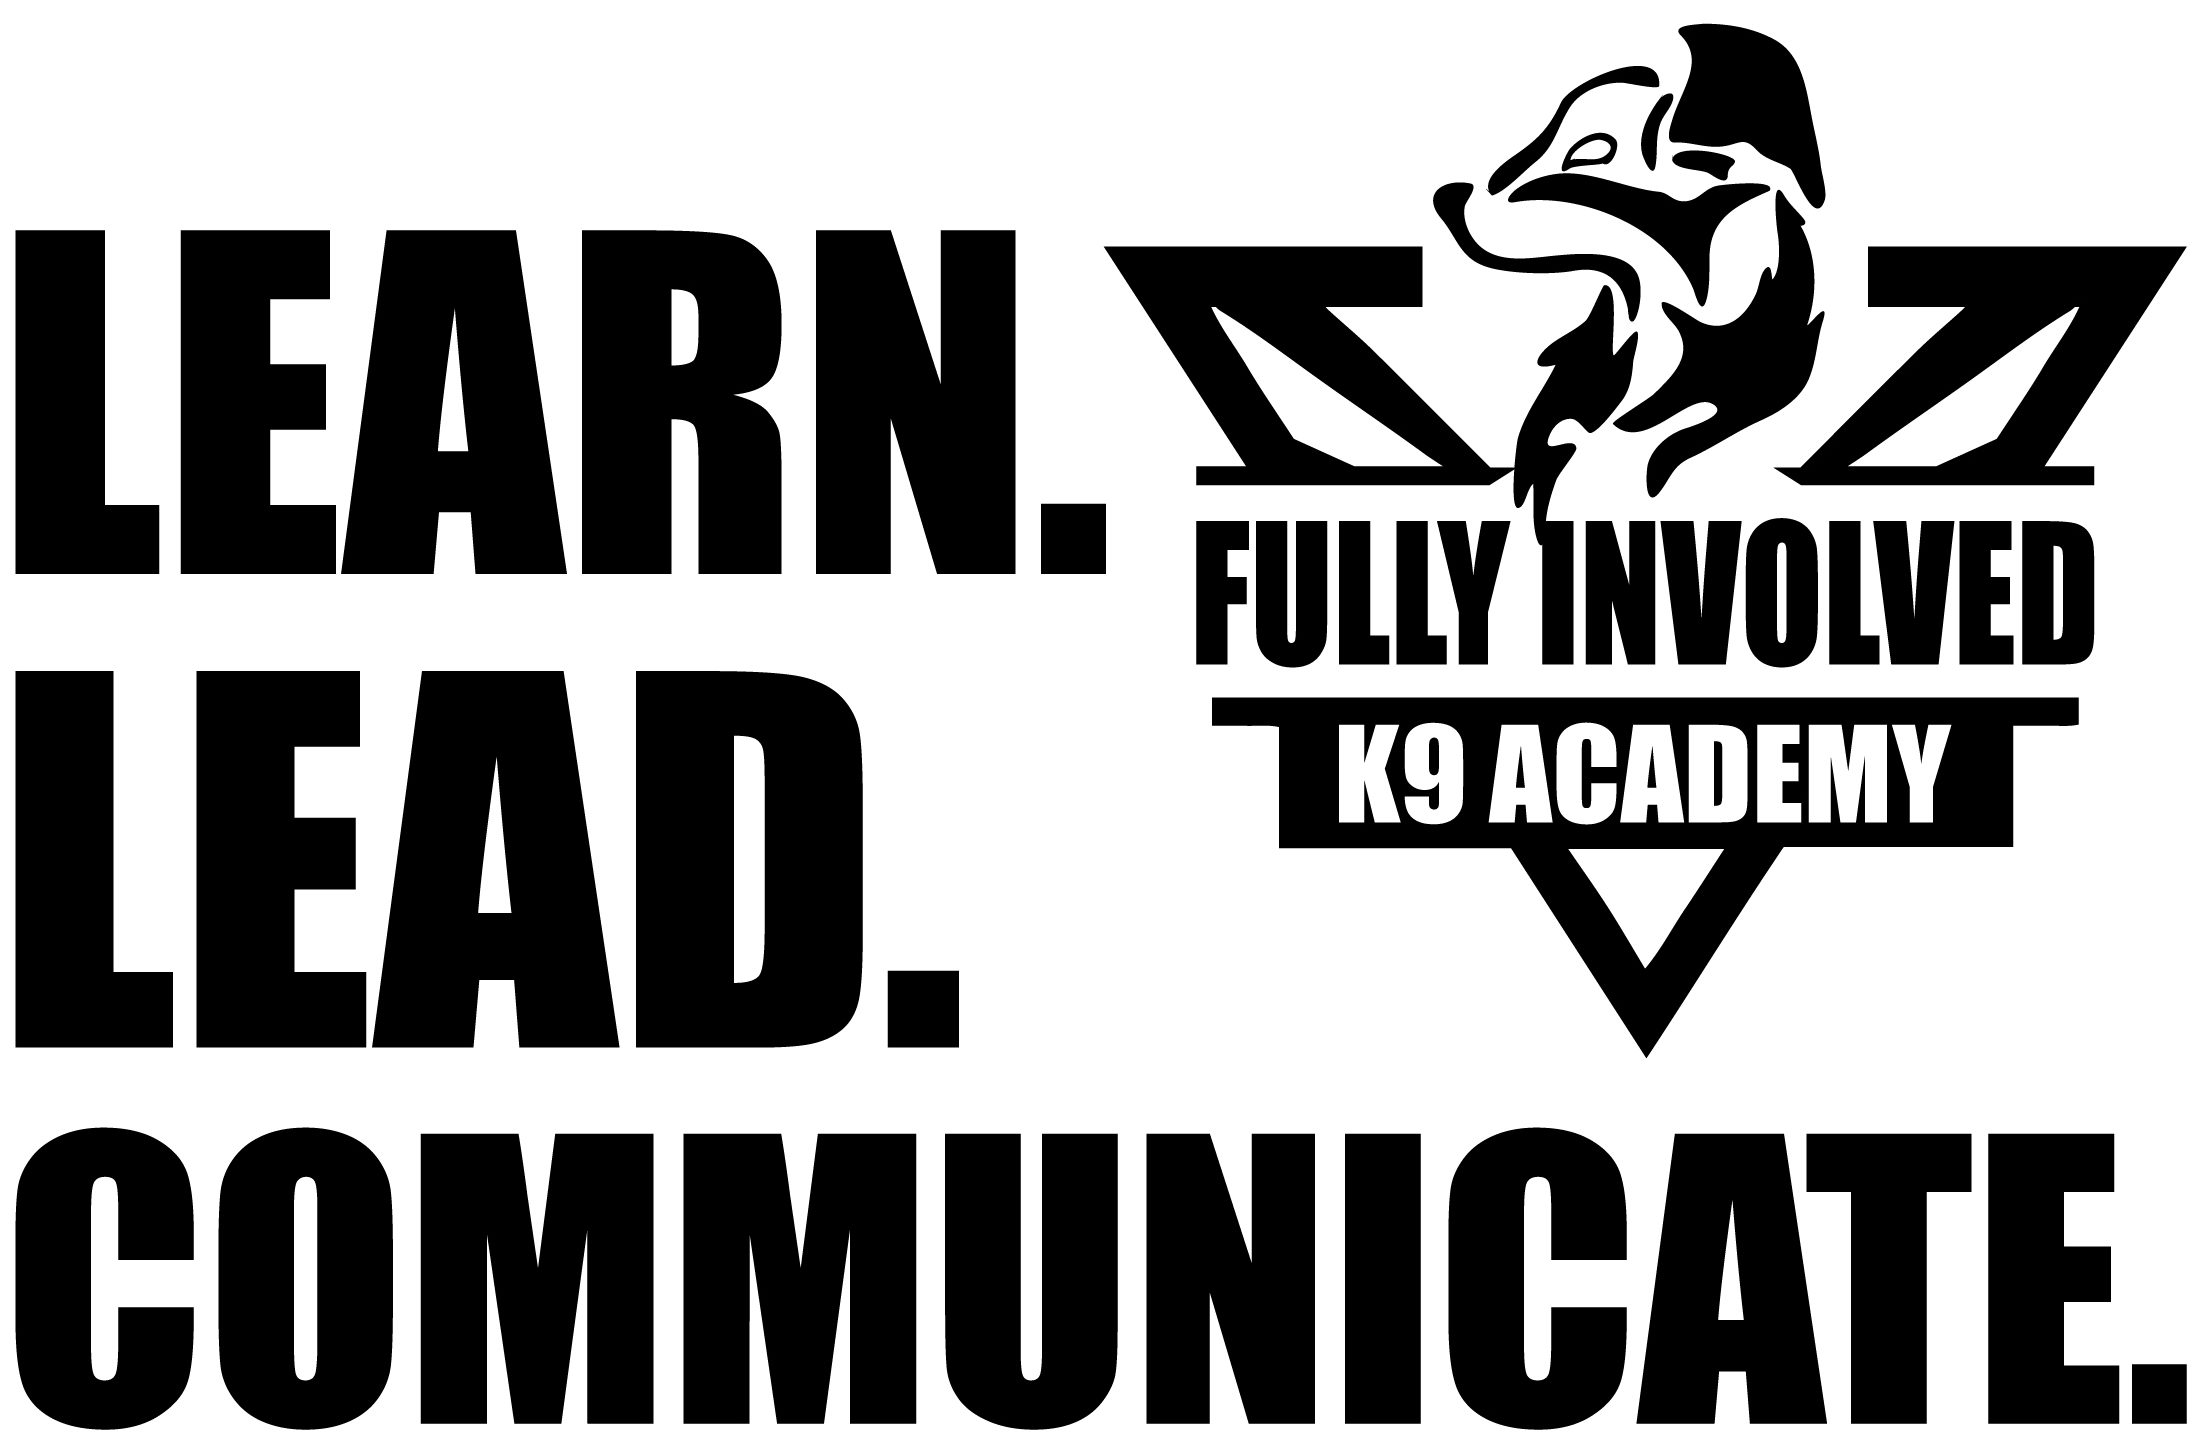 Fully Involved K9 Academy